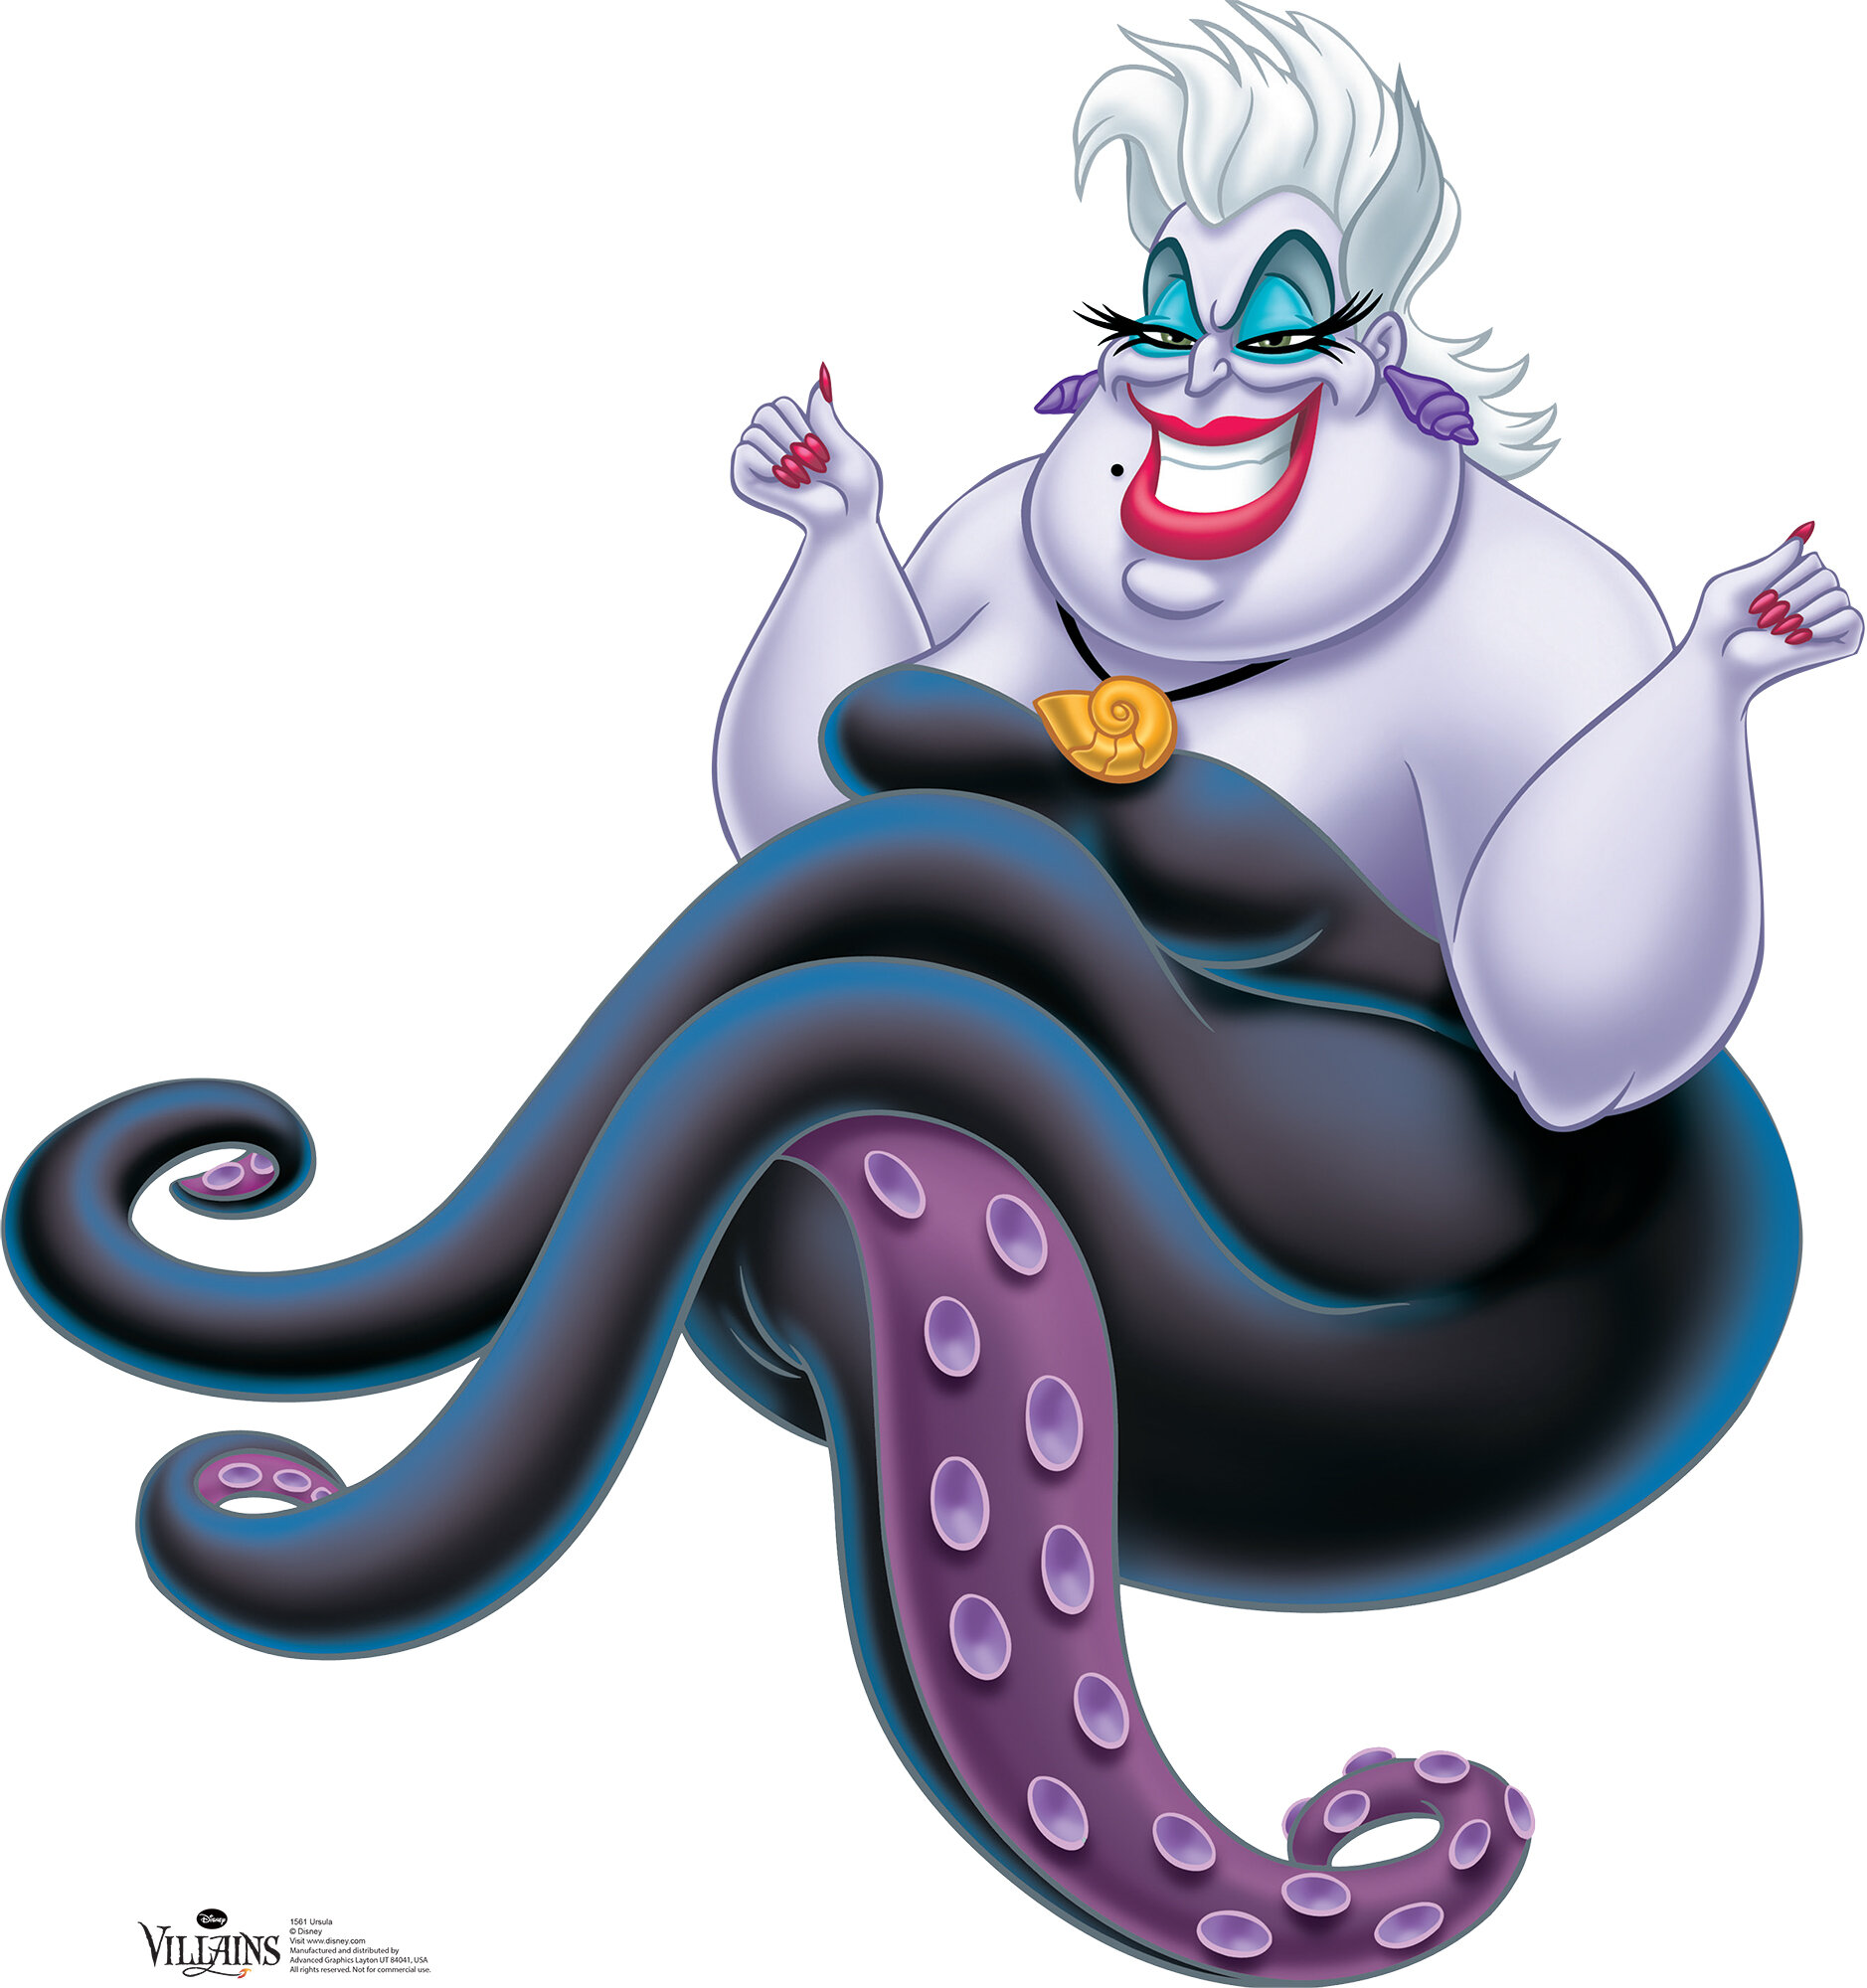 Disney inspired Ursula the villain from The Little Mermaid lanyard